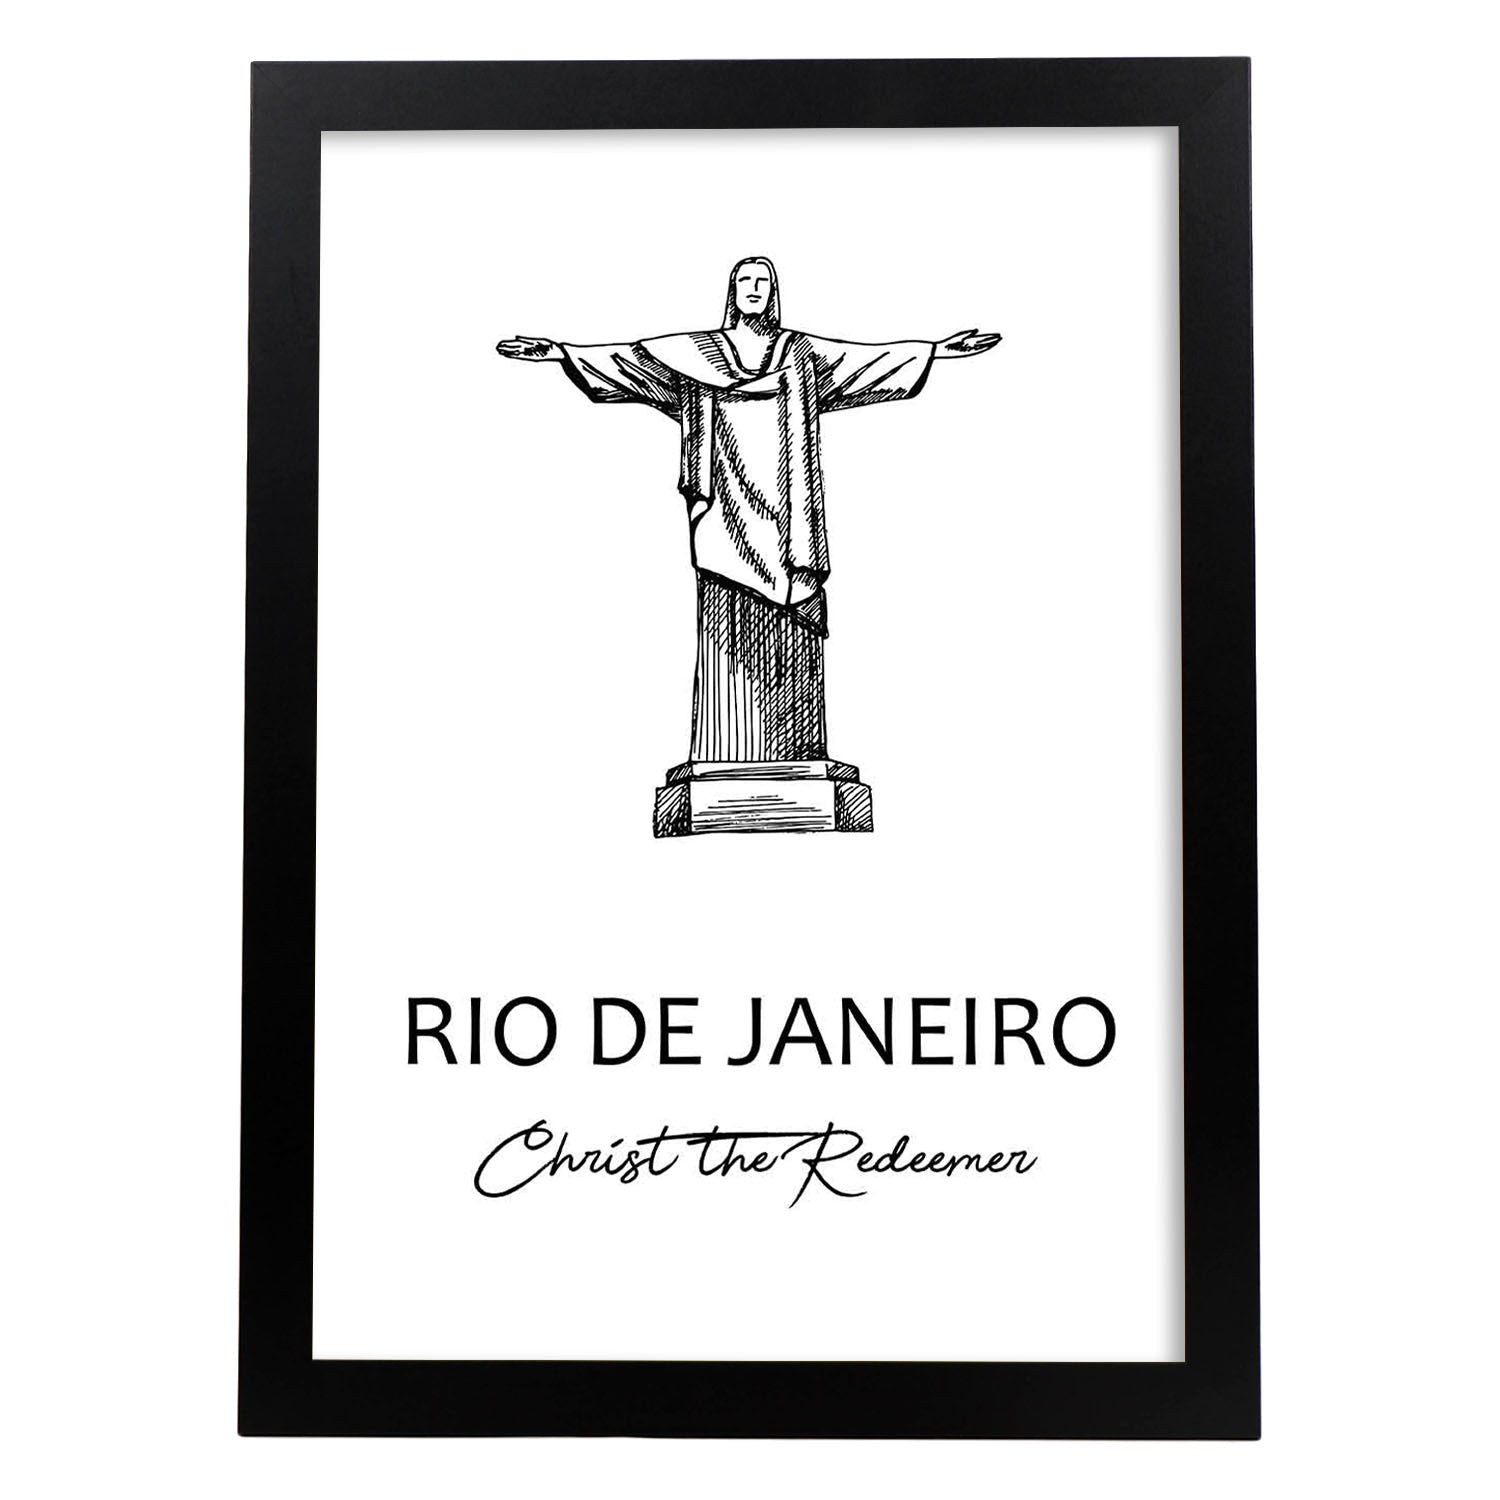 Poster de Rio de Janeiro - Cristo redentor. Láminas con monumentos de ciudades.-Artwork-Nacnic-A4-Marco Negro-Nacnic Estudio SL